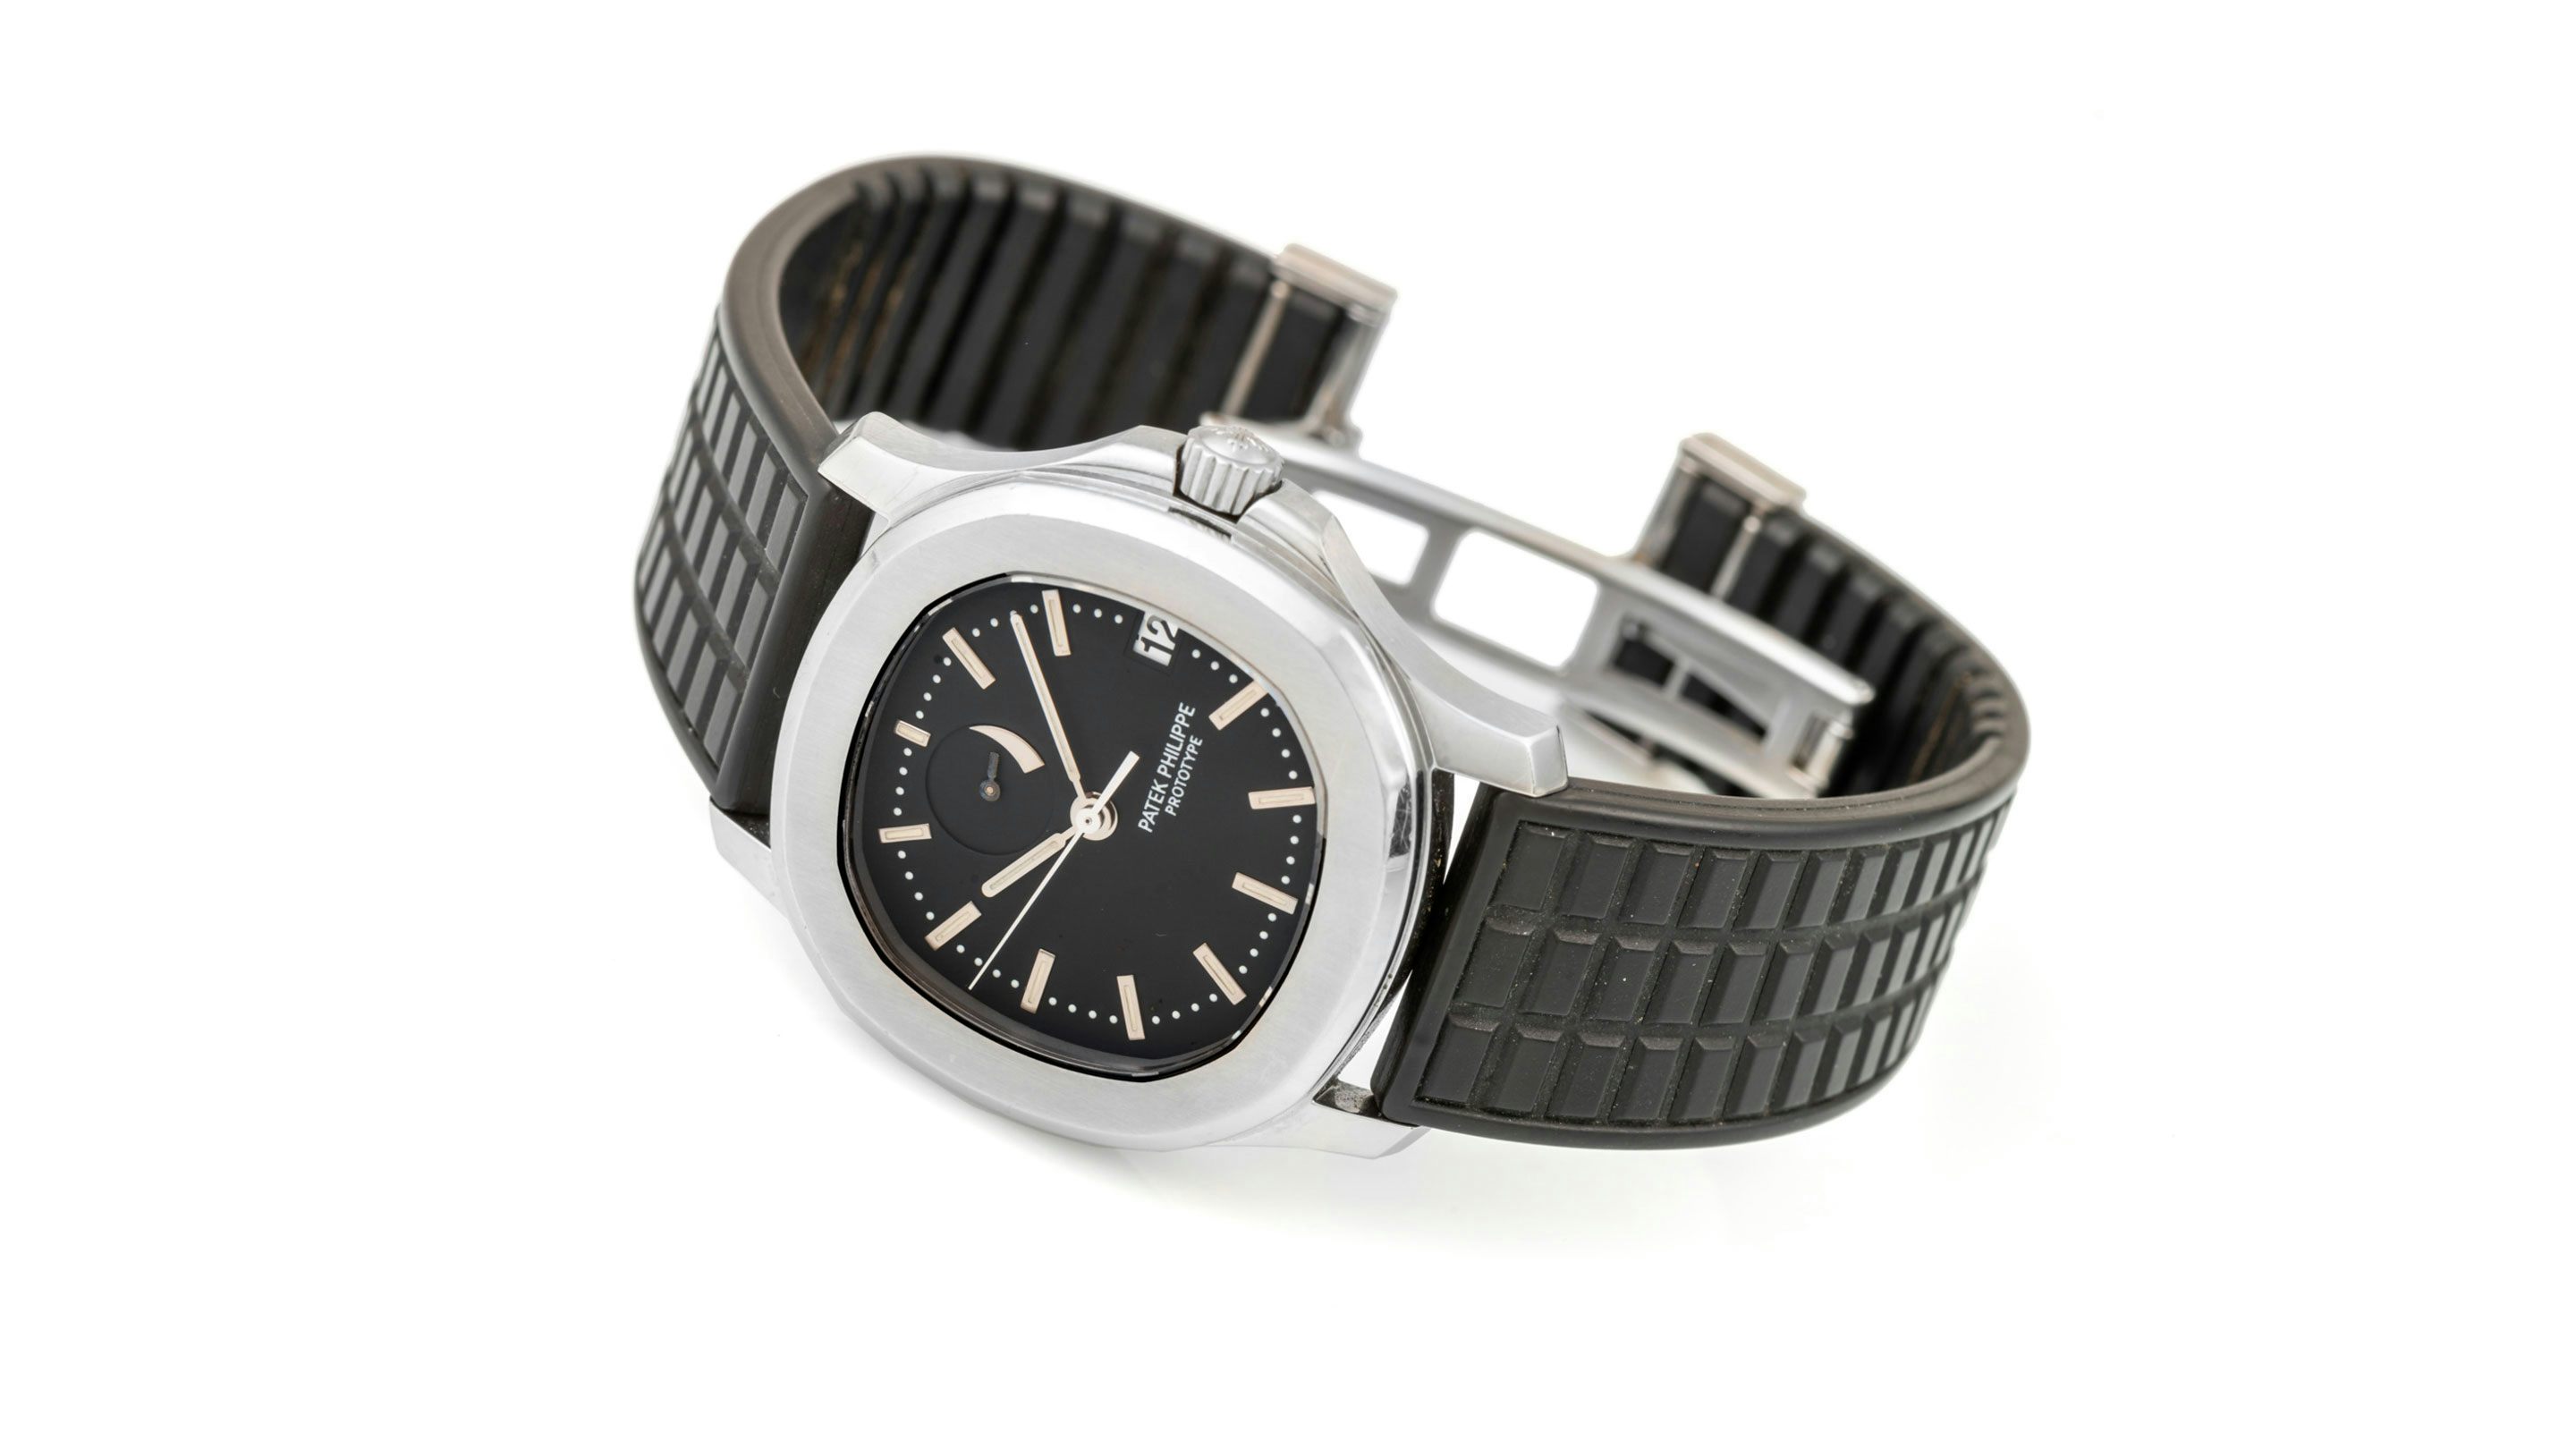 Patek Philippe Steel Aquanaut First Series Watch Ref. 5060